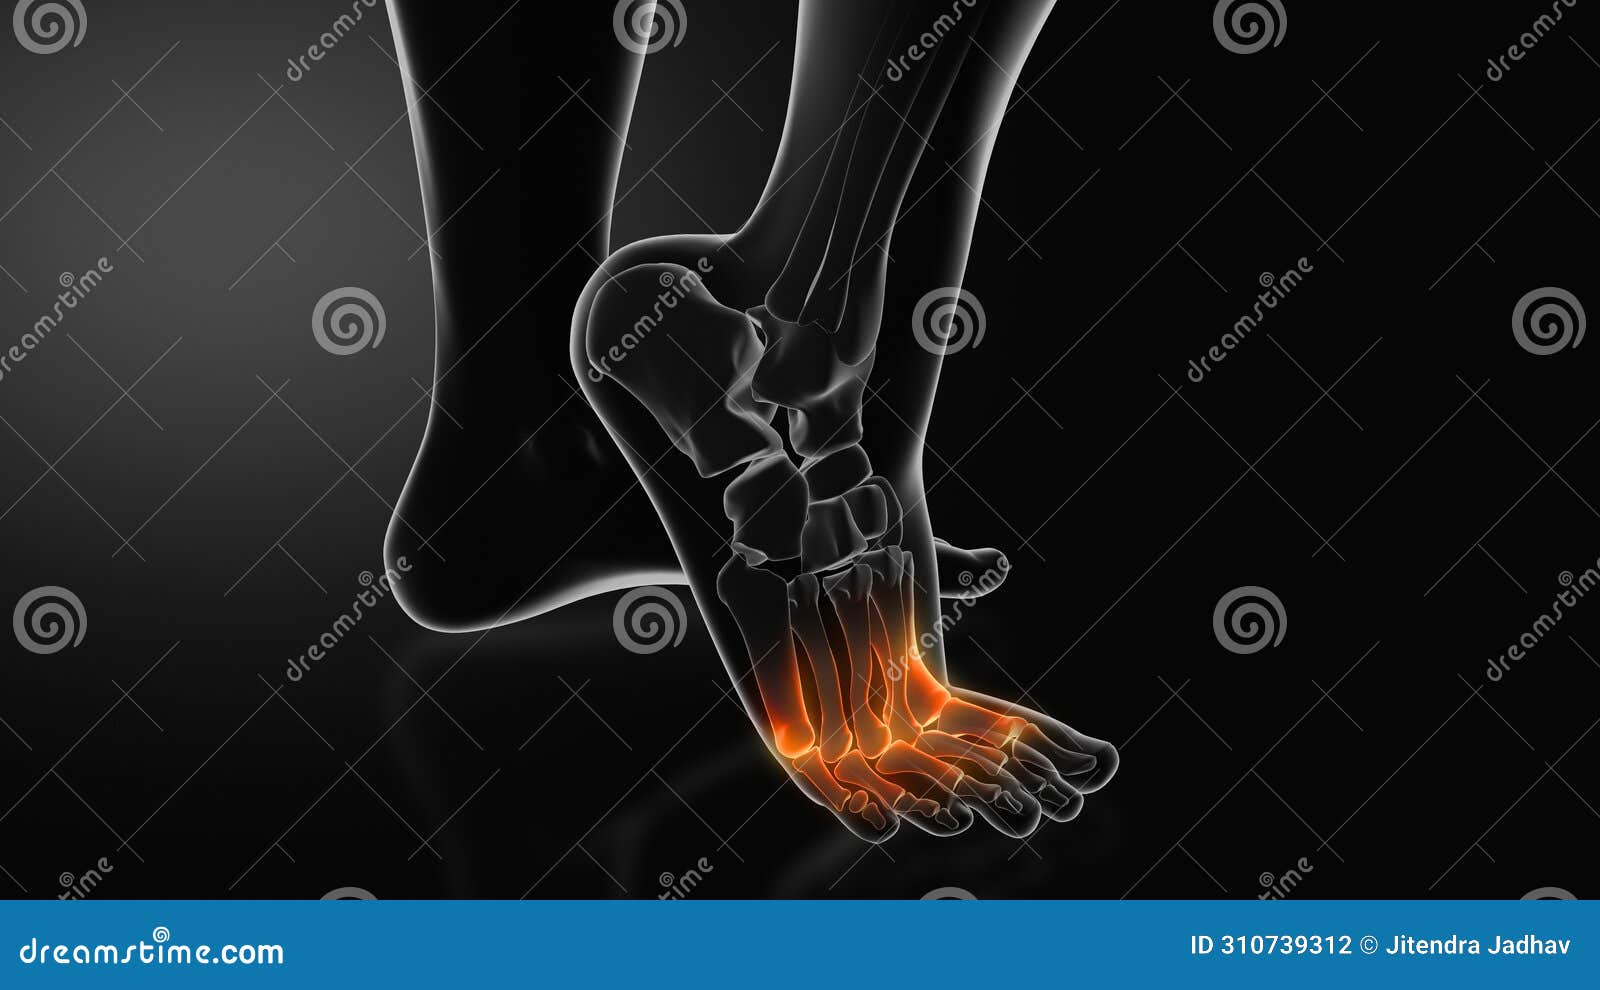 metatarsalgia or ball of foot pain